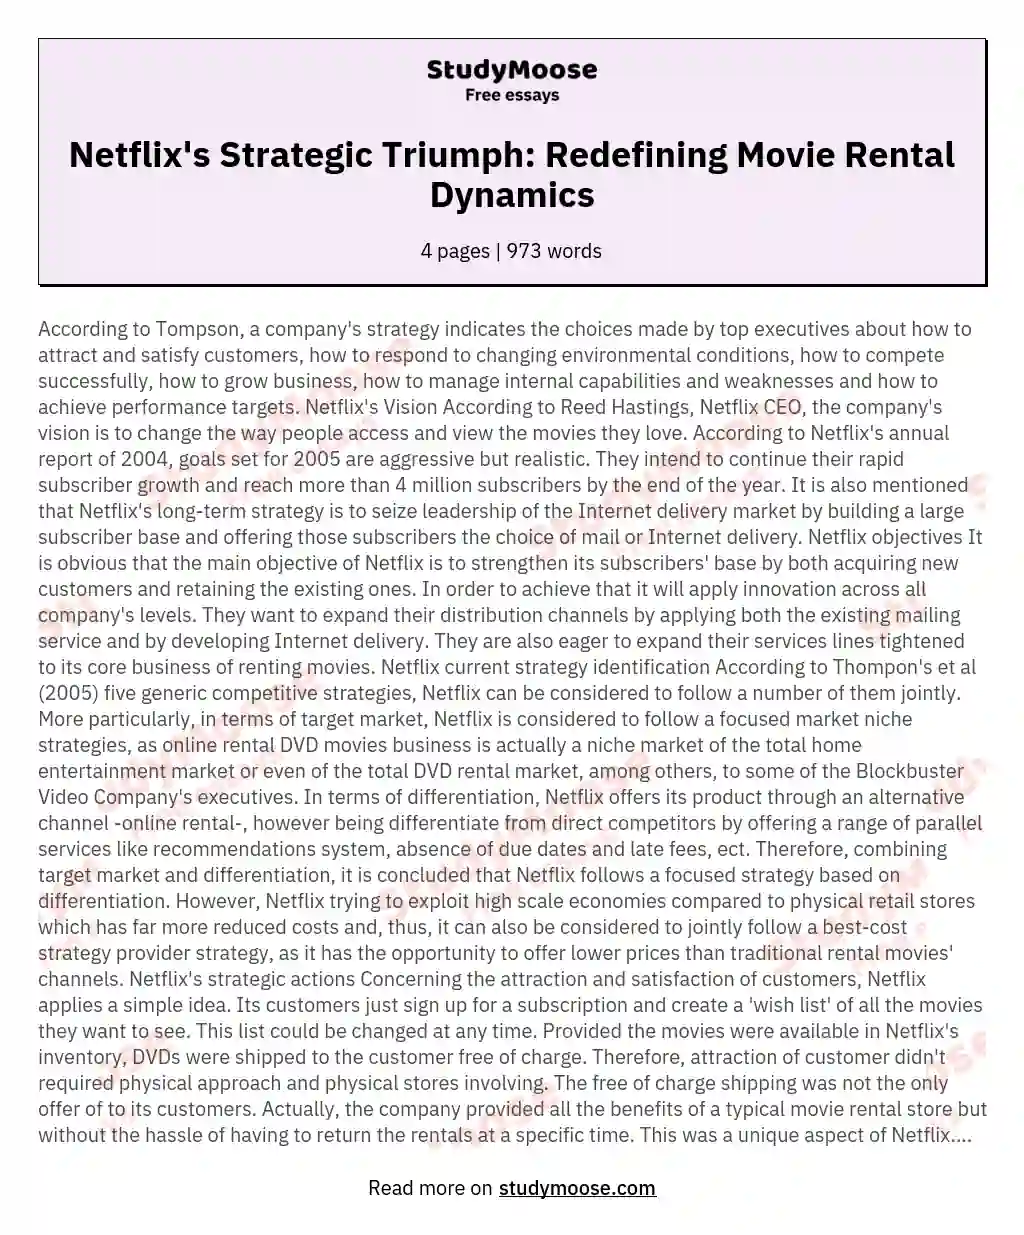 Netflix's Strategic Triumph: Redefining Movie Rental Dynamics essay